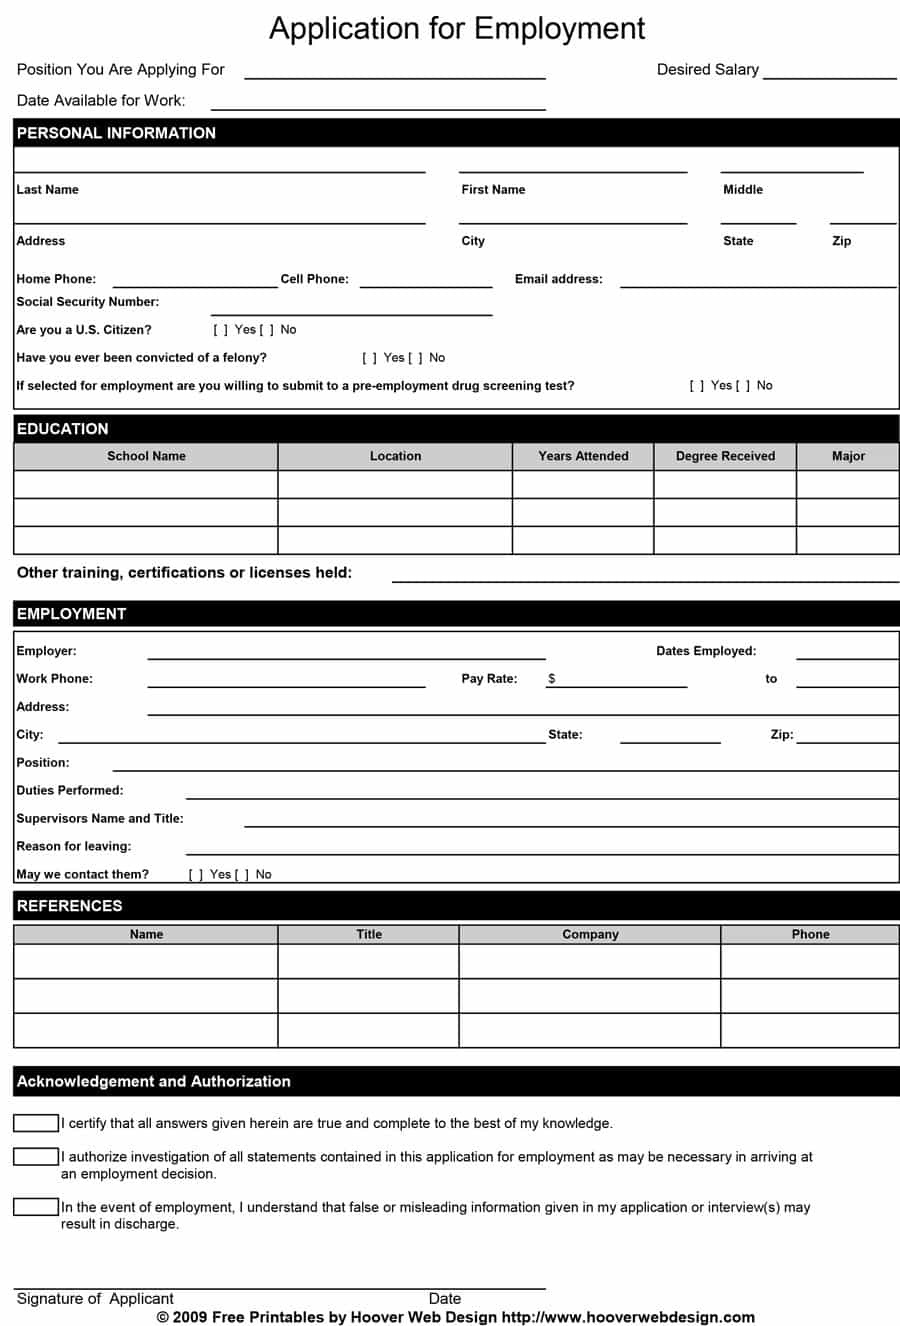 50 Free Employment / Job Application Form Templates [Printable] ᐅ - Free Online Printable Applications